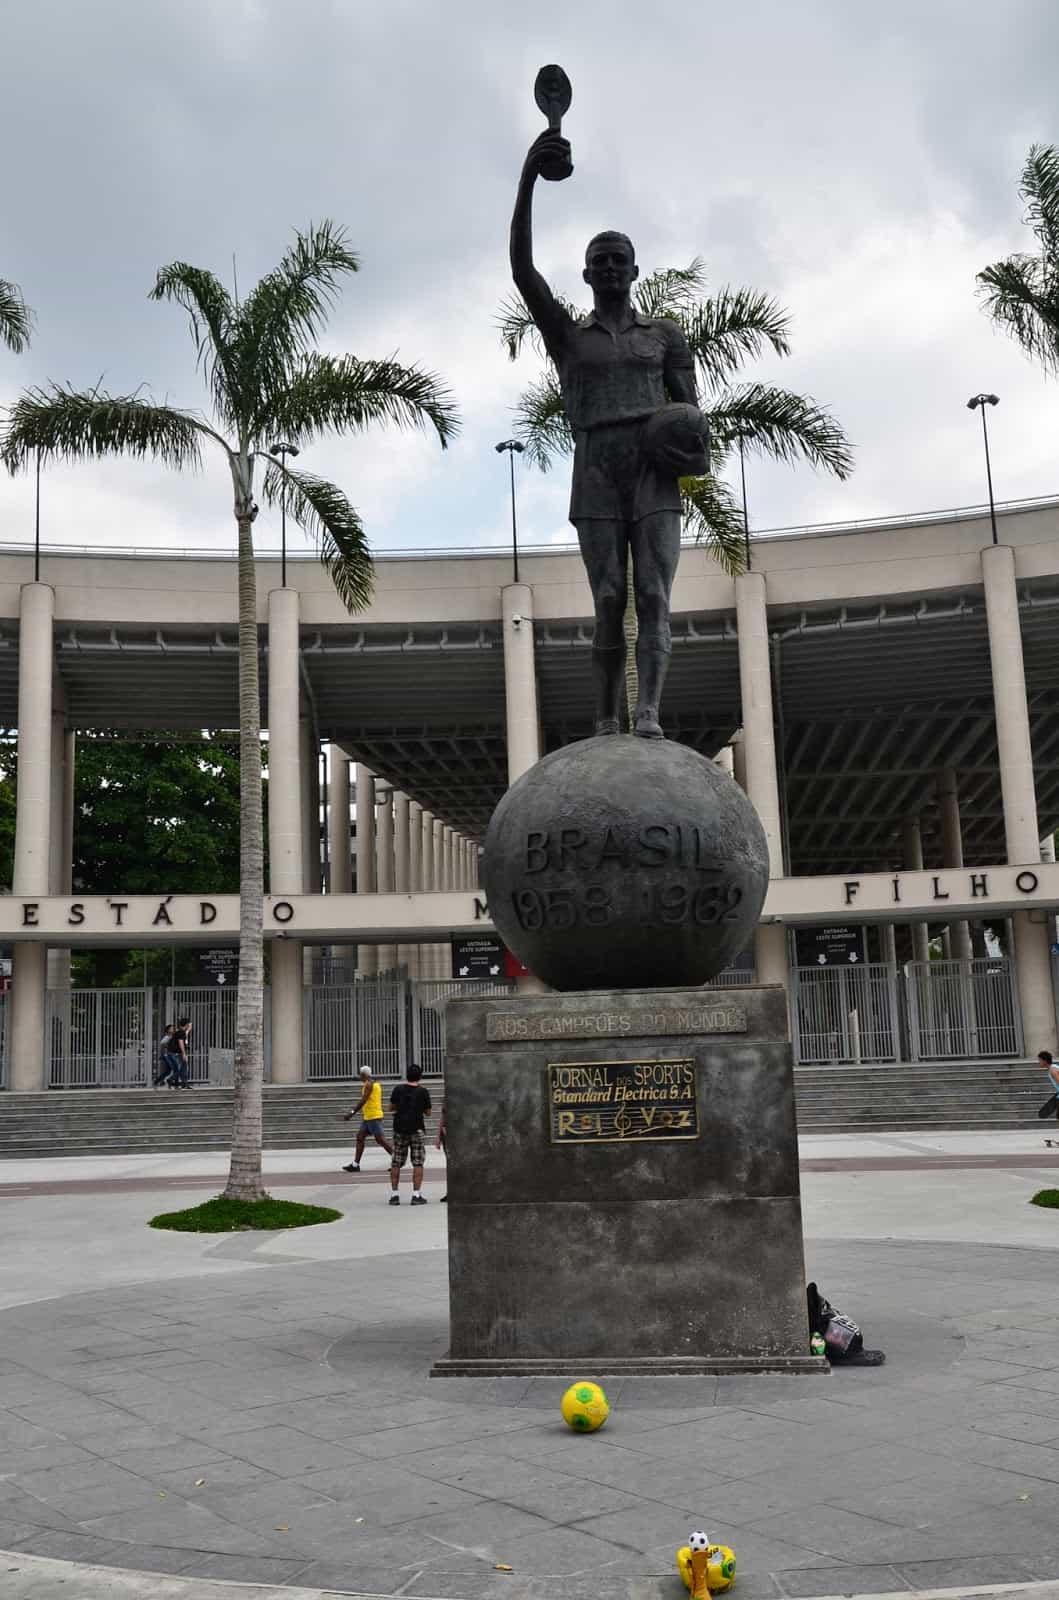 World Cup Champions monument for 1958 & 1962 at Estádio do Maracanã in Rio de Janeiro, Brazil